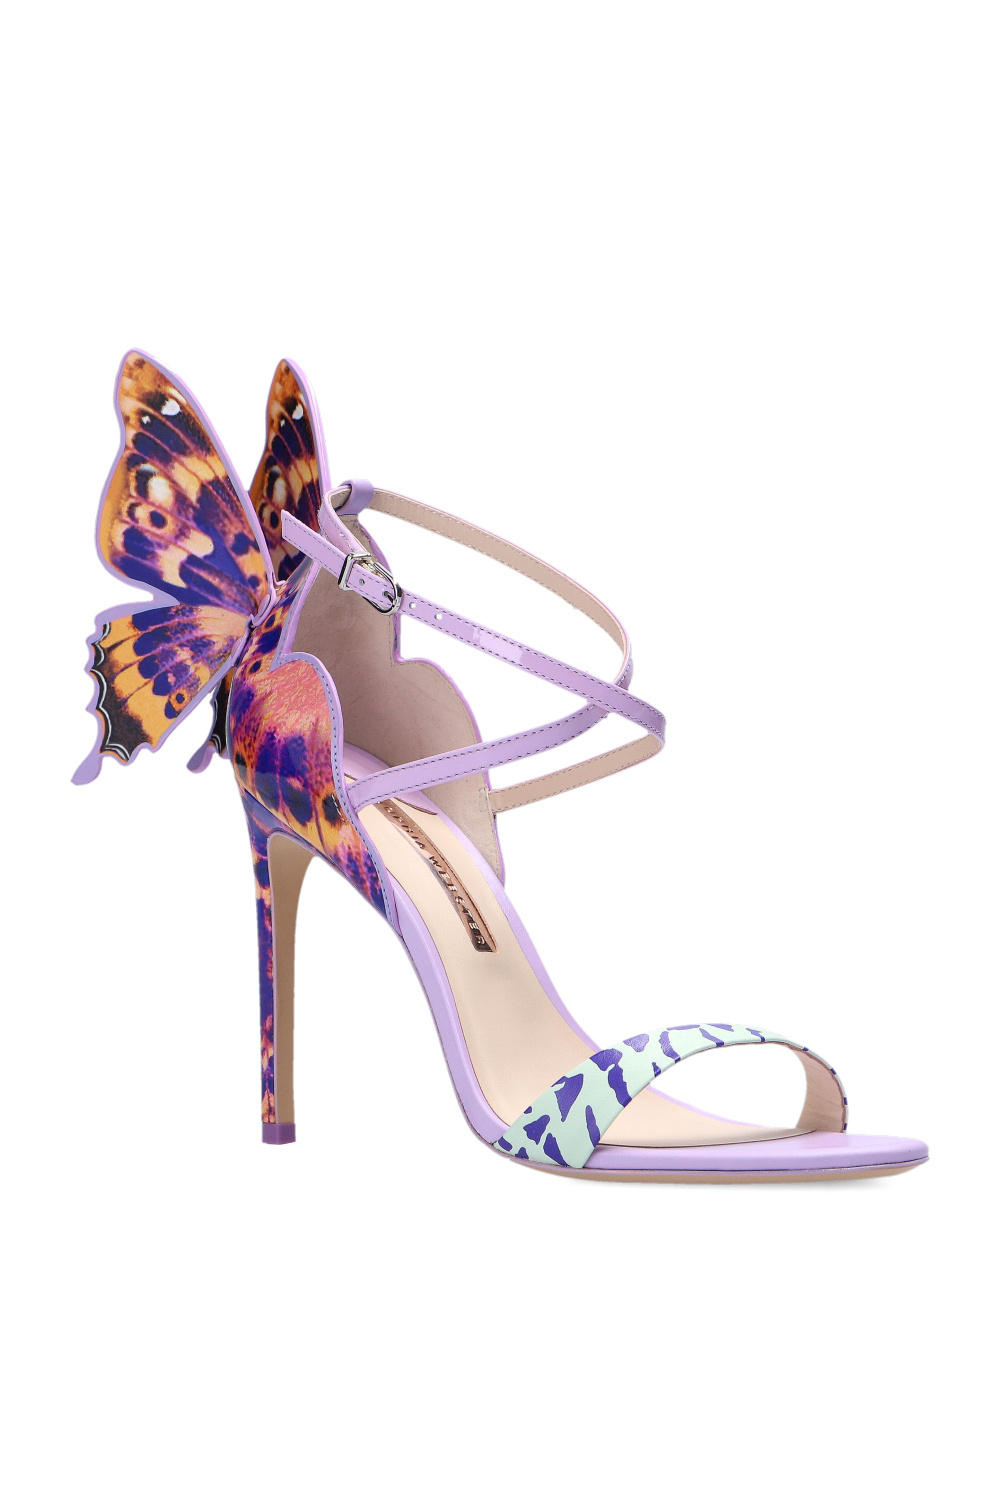 Sophia Webster ‘Chiara’ stiletto sandals